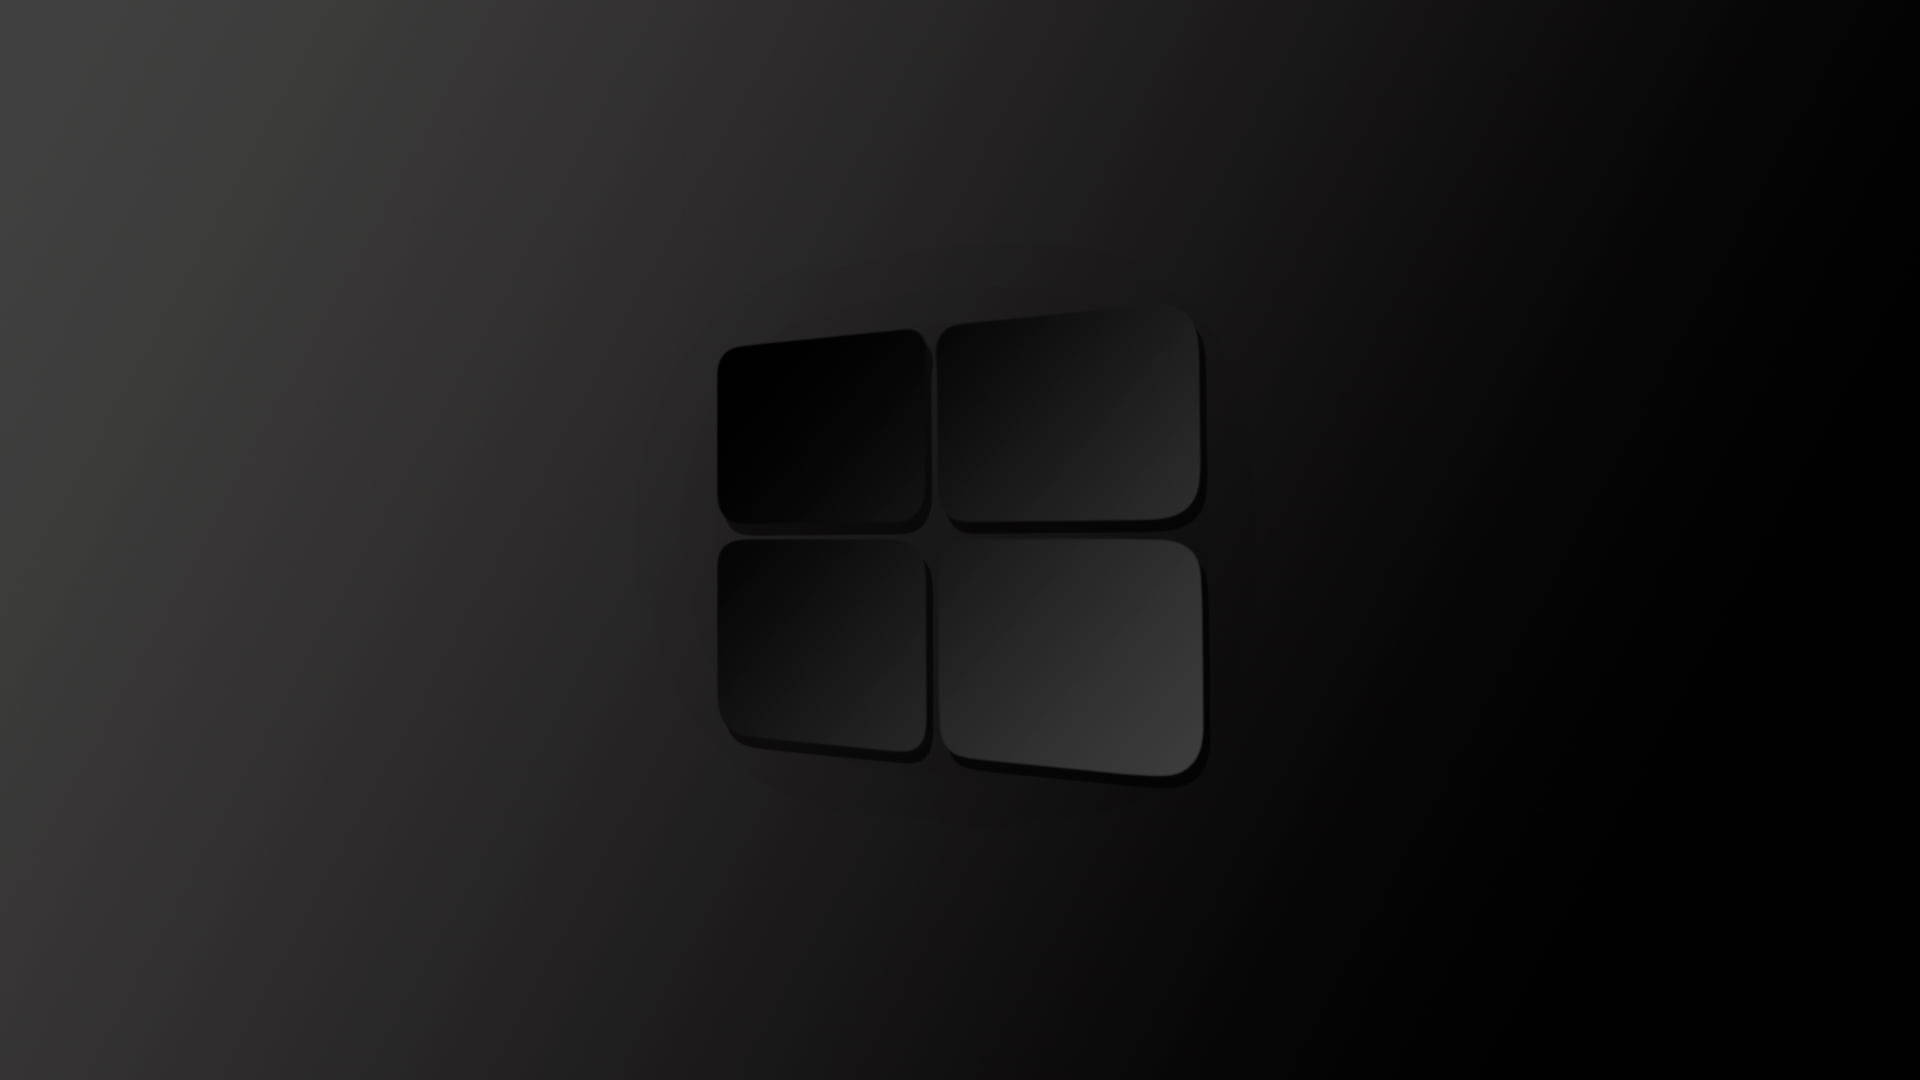 Black Windows 10 Hd With Shadow Background